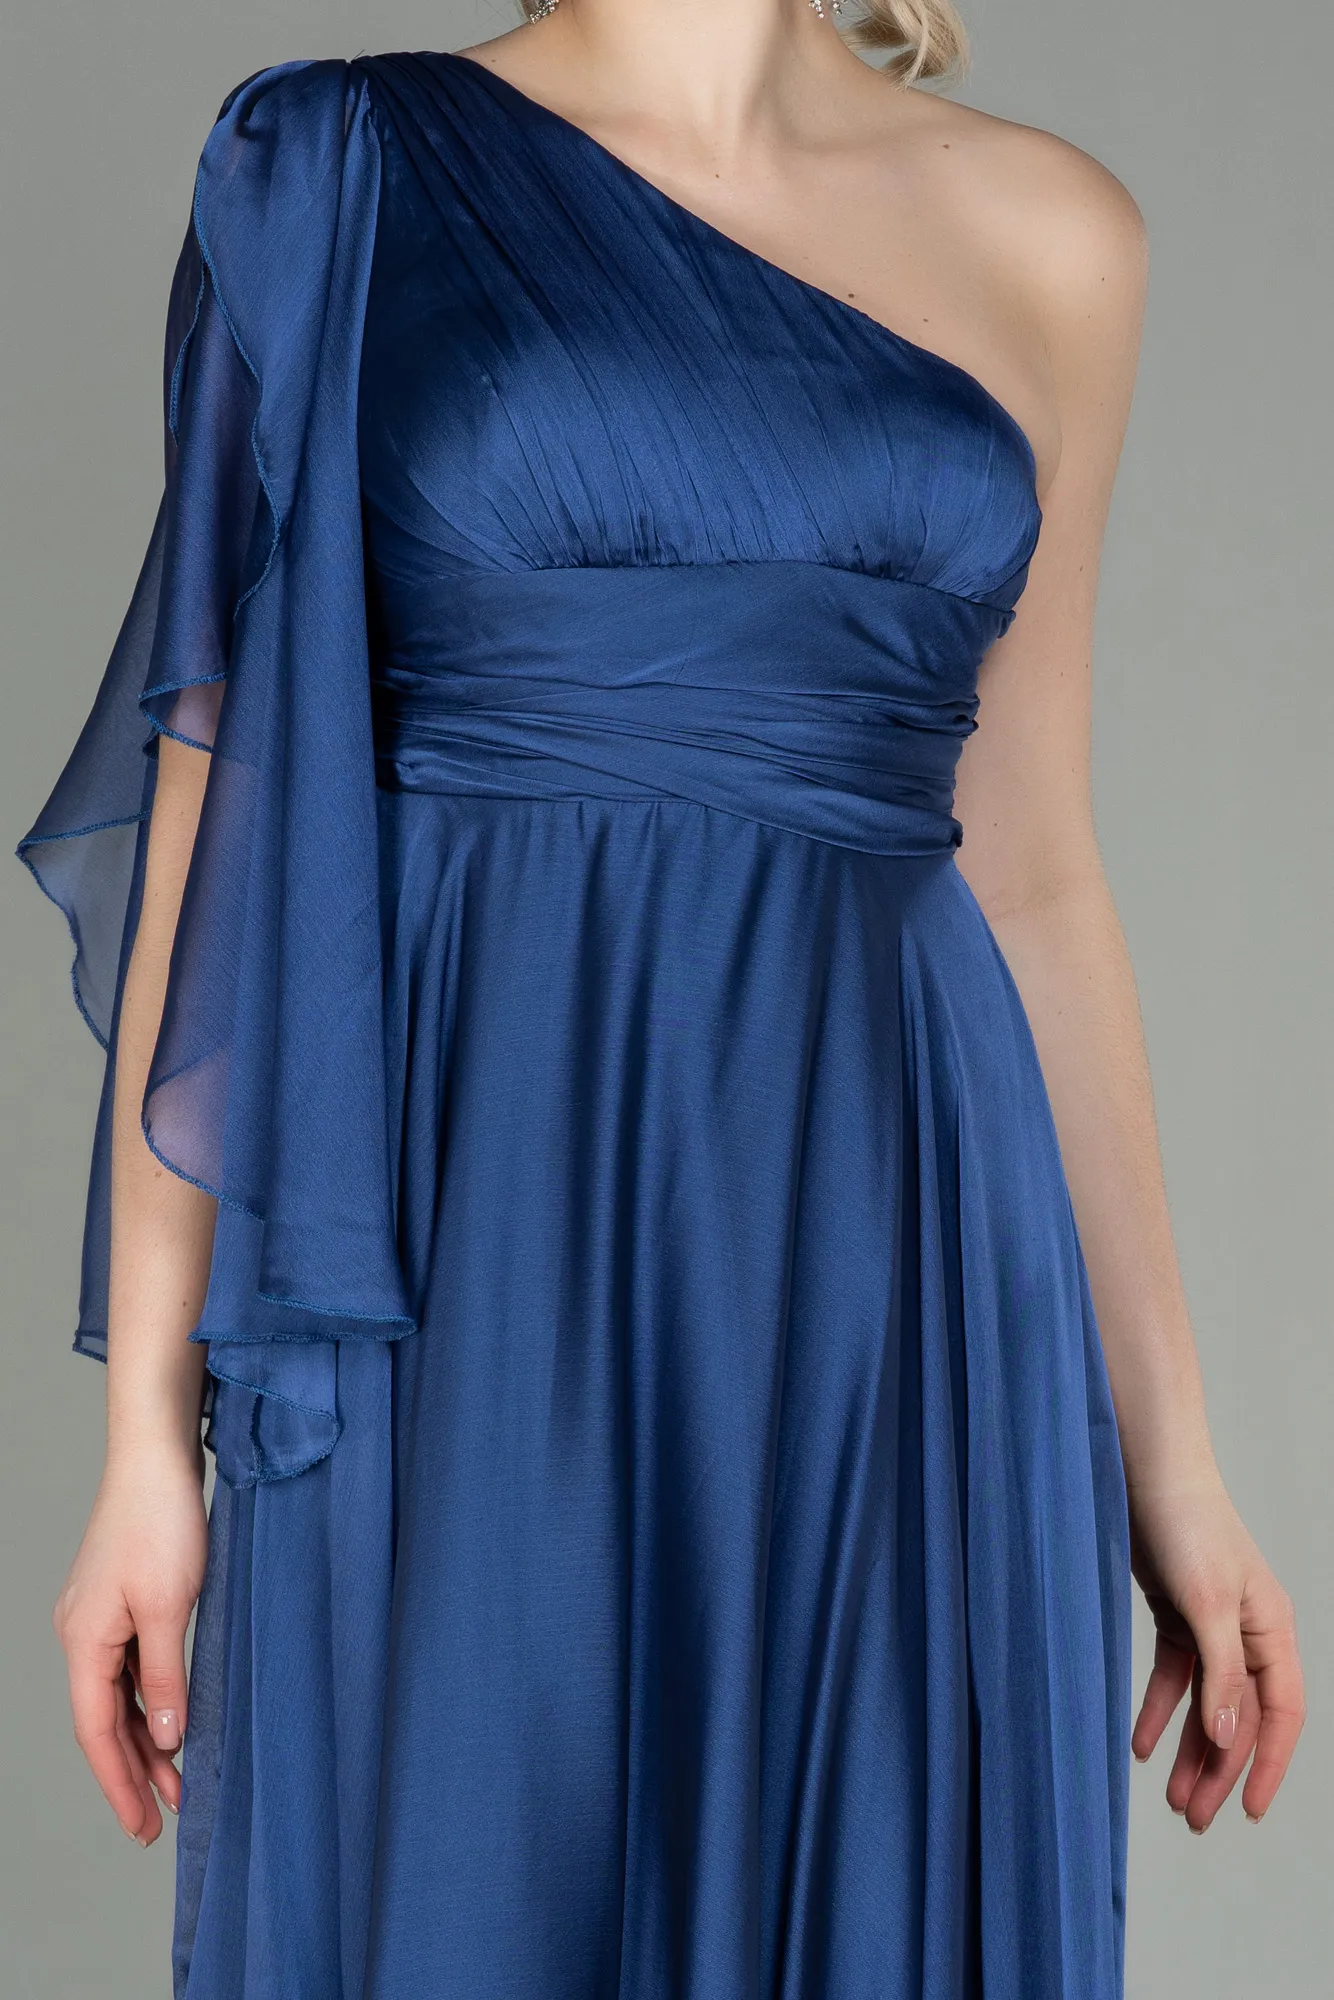 Grey-Indigo-Long Chiffon Evening Dress ABU3449